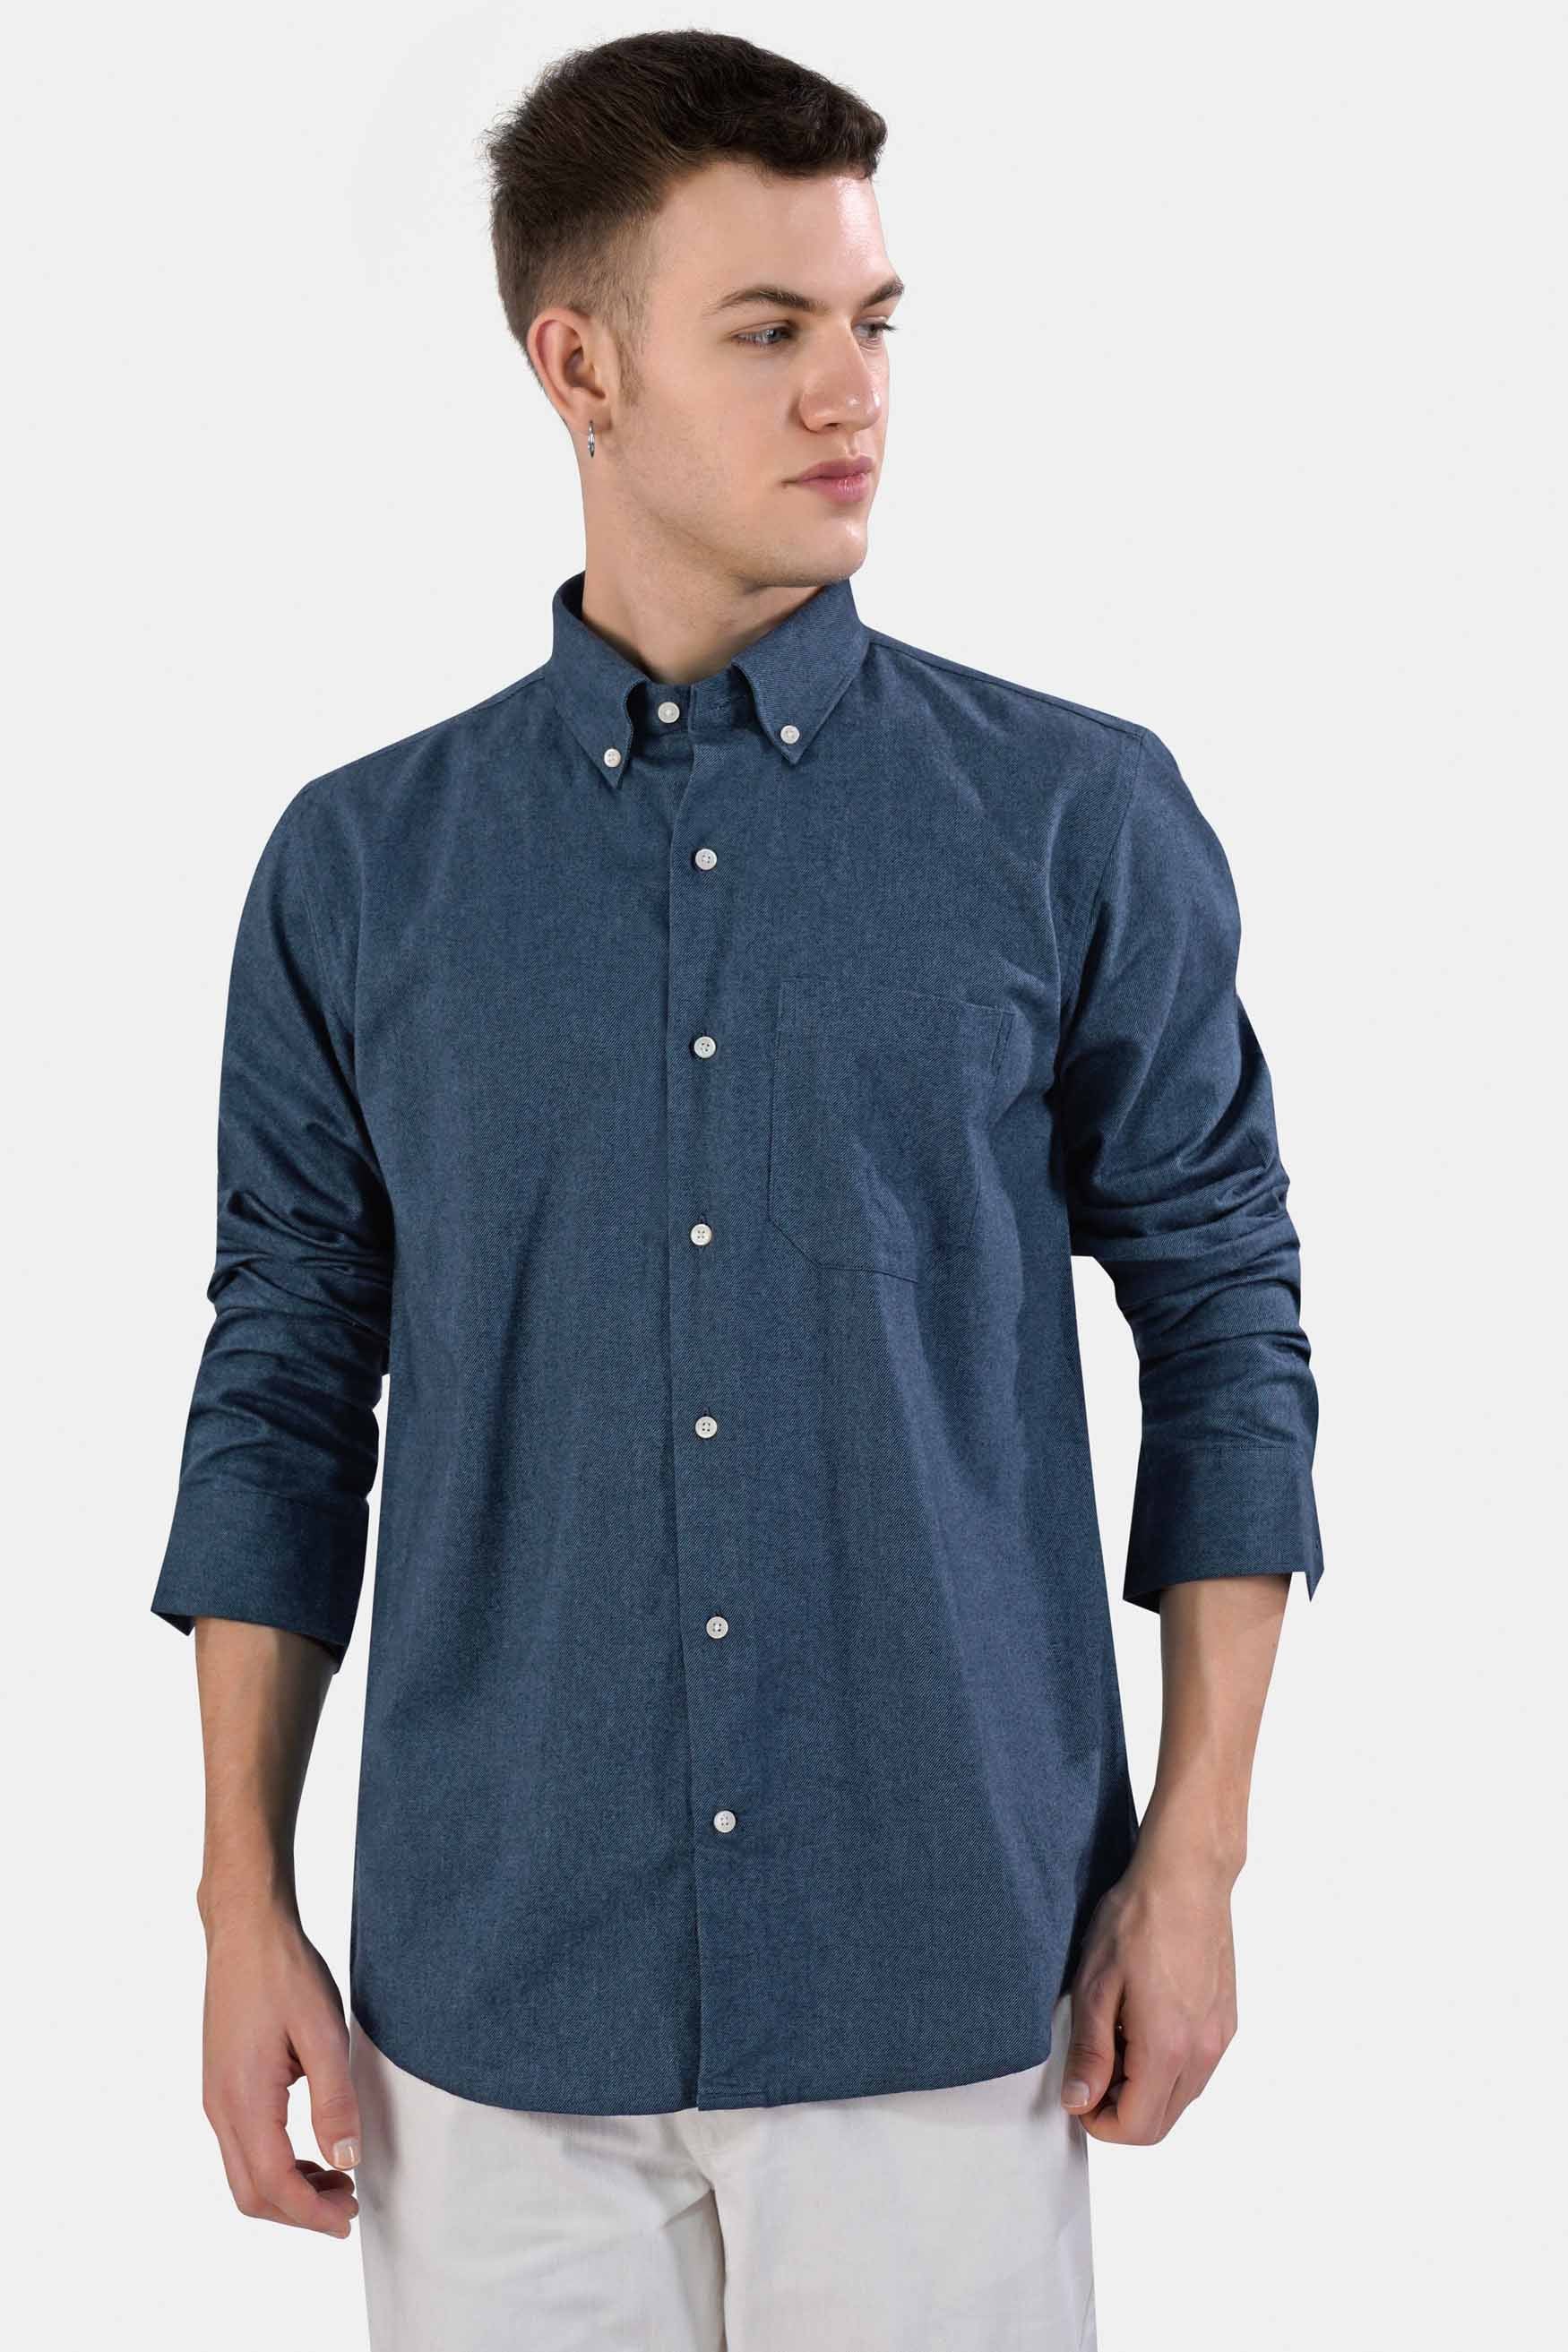 Spruce Blue Flannel Button Down Shirt